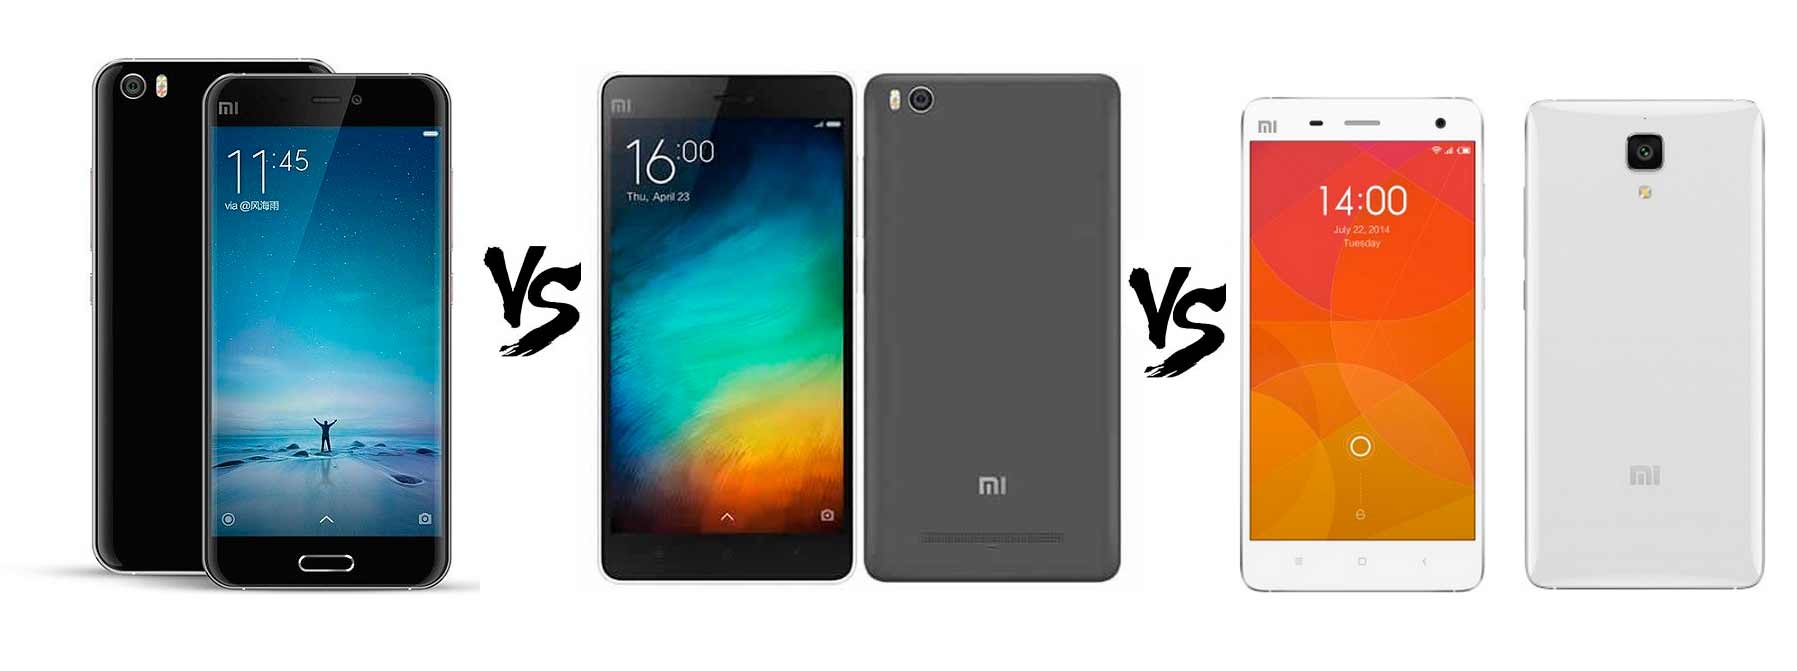 Xiaomi Mi5 vs Xiaomi mi4 vs Xiaomi Mi4C